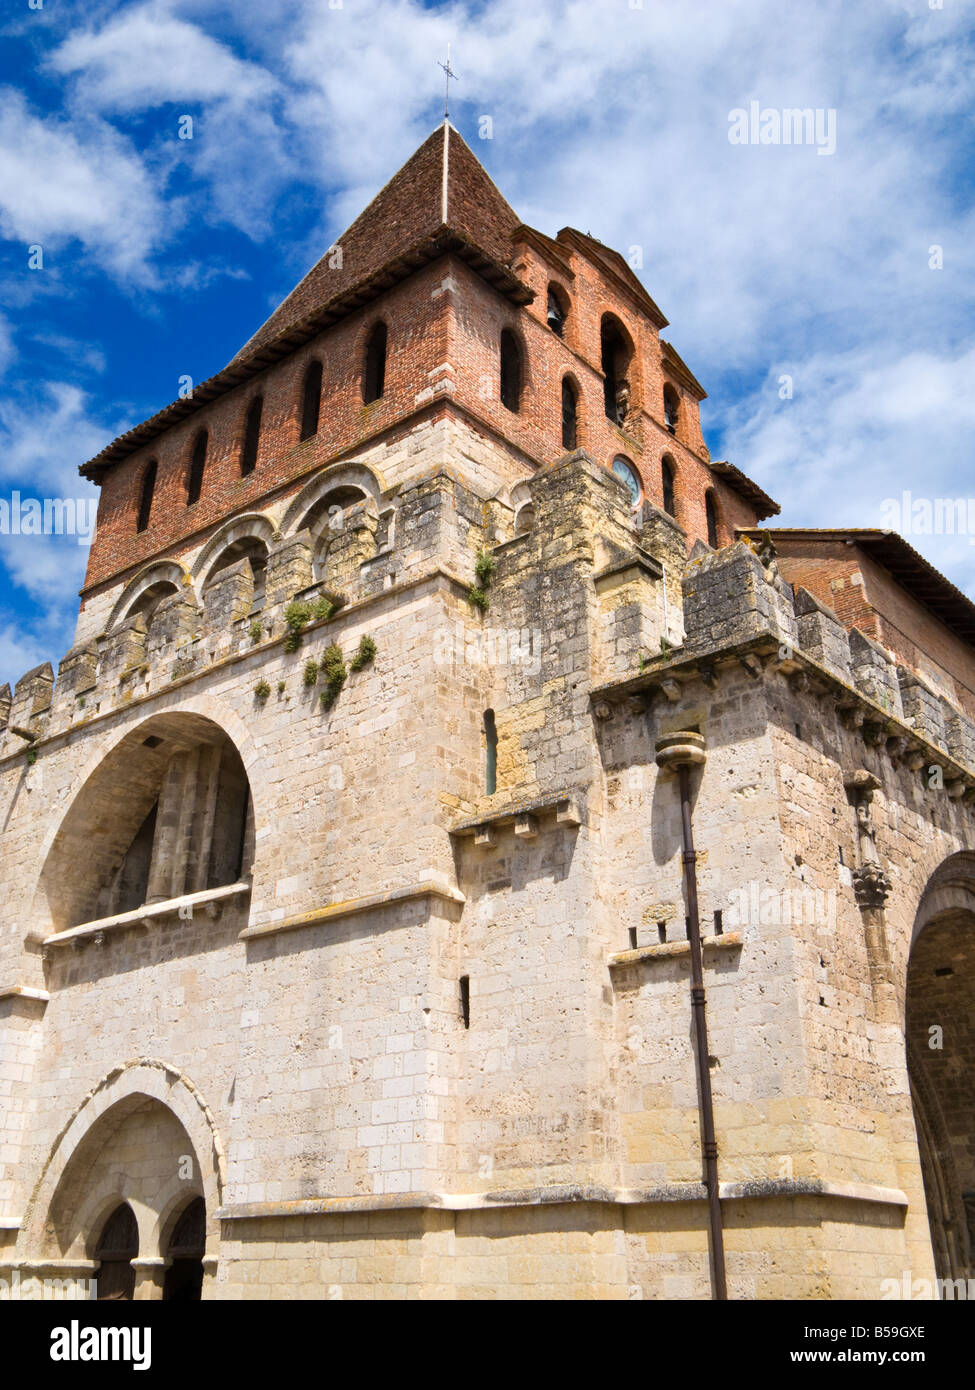 The Bell tower of the Abbaye Saint Pierre de Moissac in Moissac, Tarn et Garonne, France, Europe Stock Photo